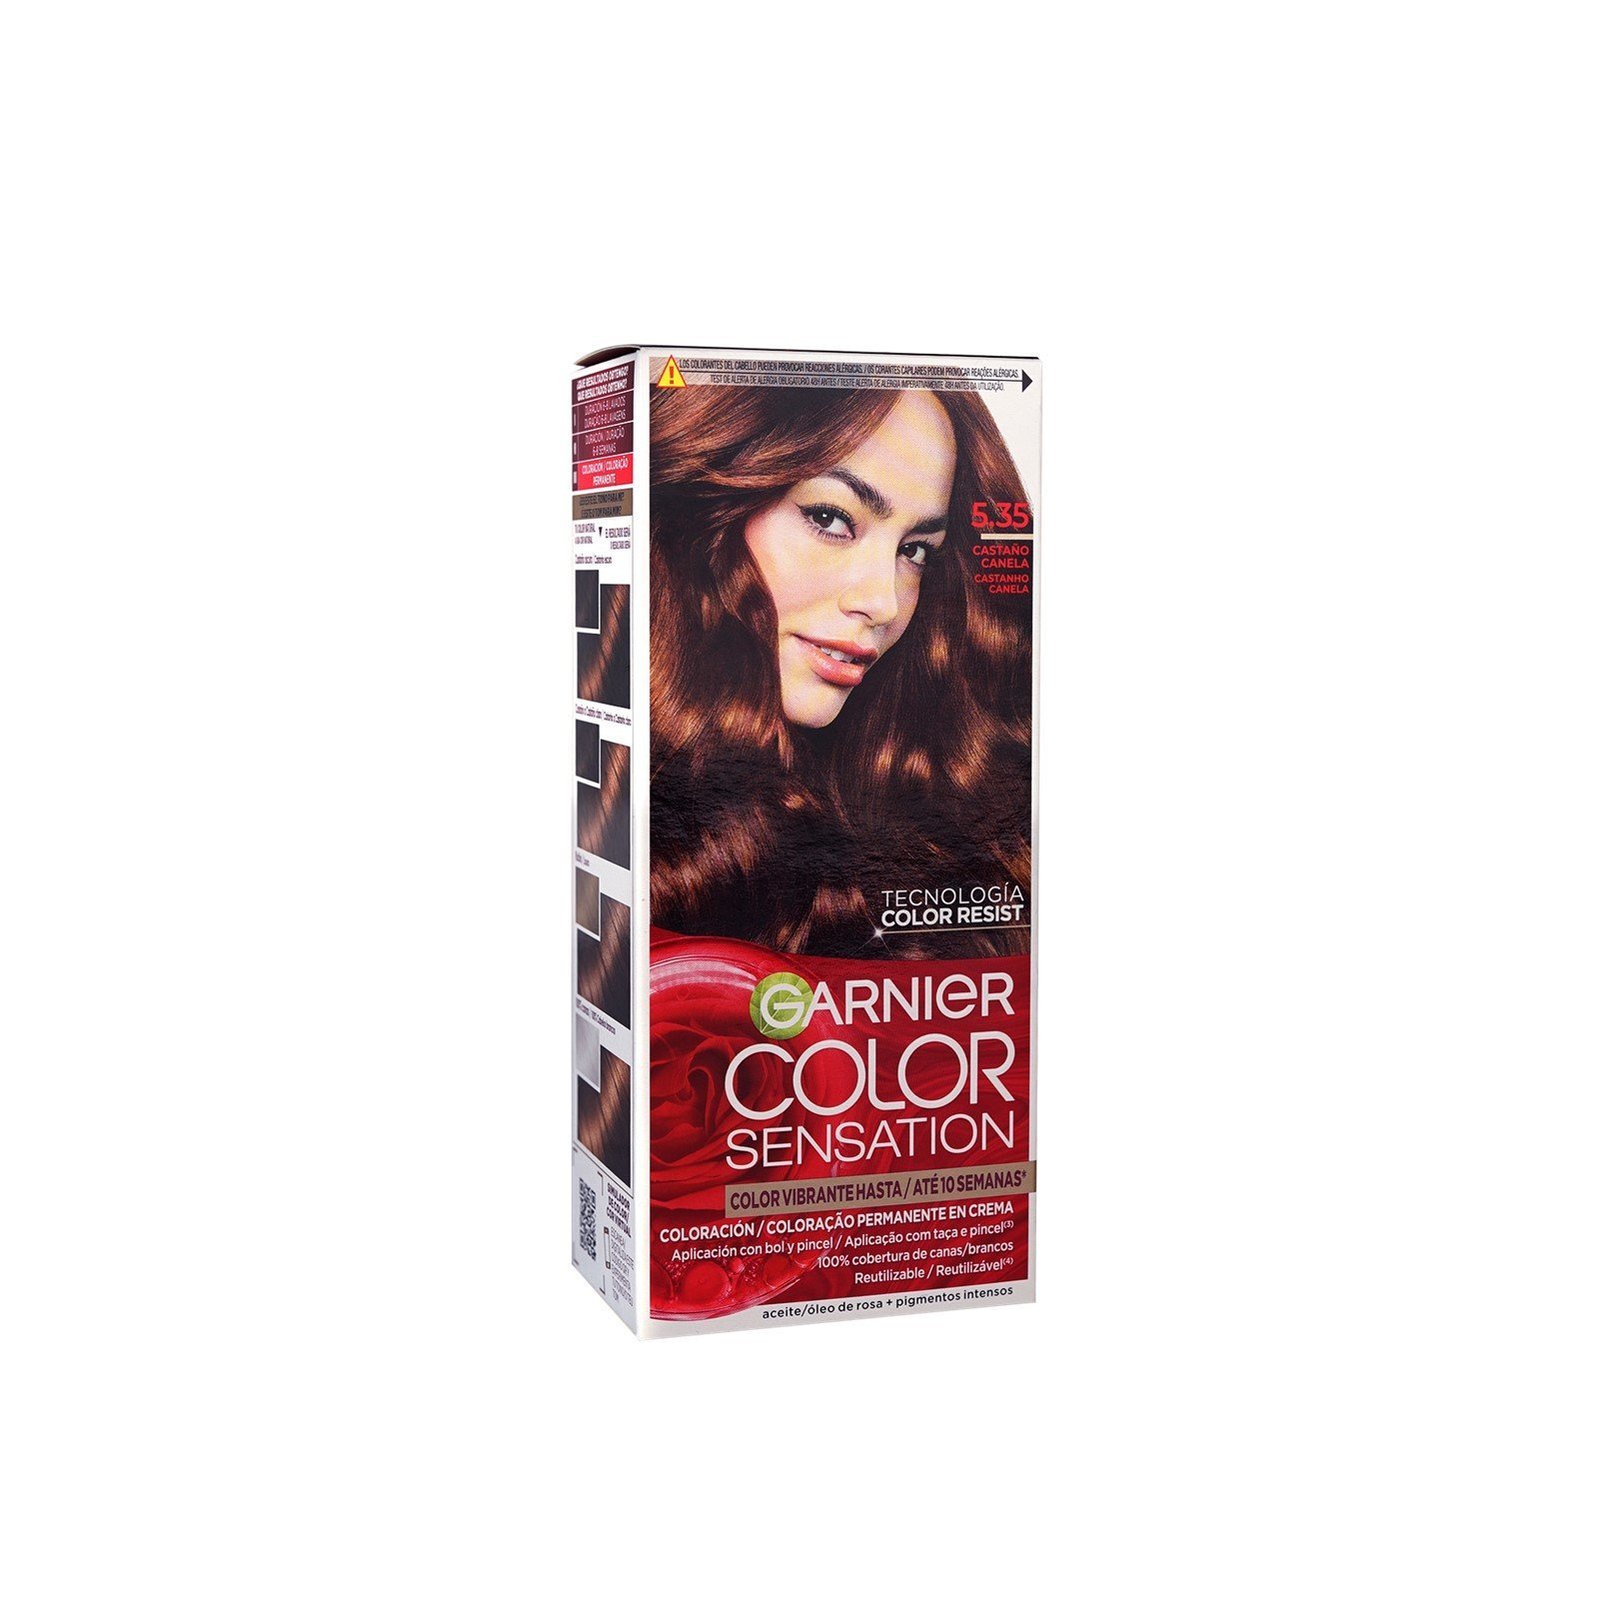 Garnier Color Sensation Permanent Hair Dye 5.35 Cinnamon Brown